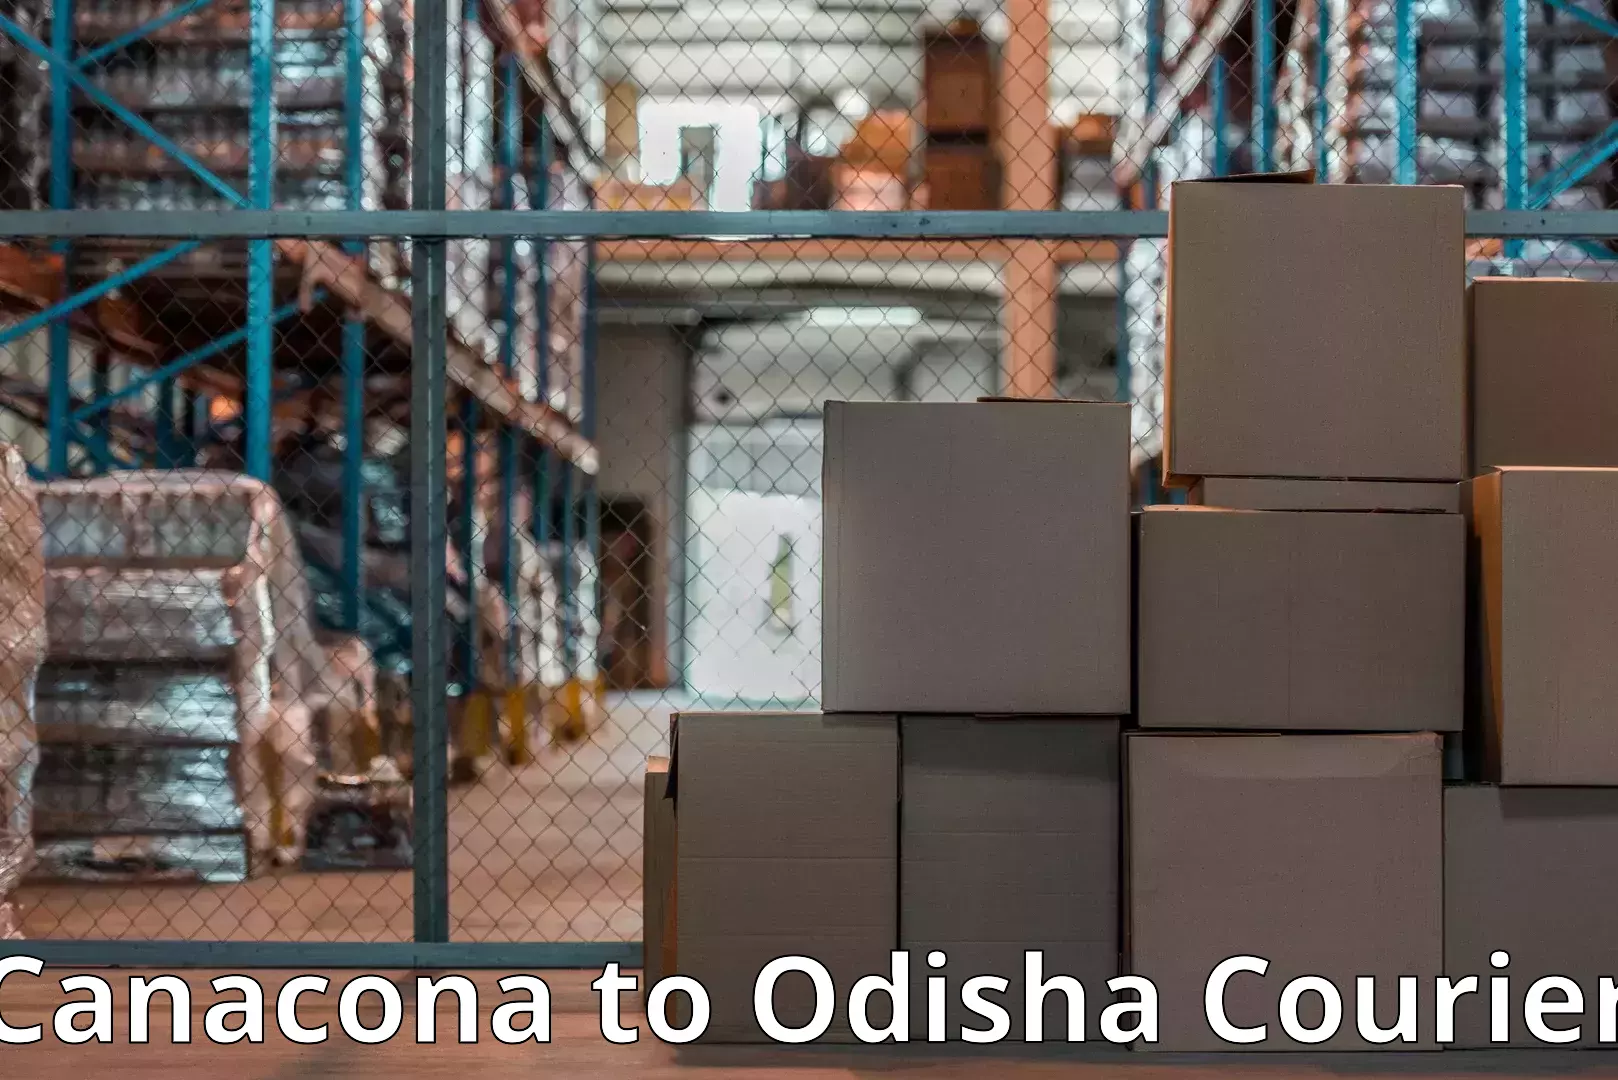 Trusted relocation experts Canacona to Odisha